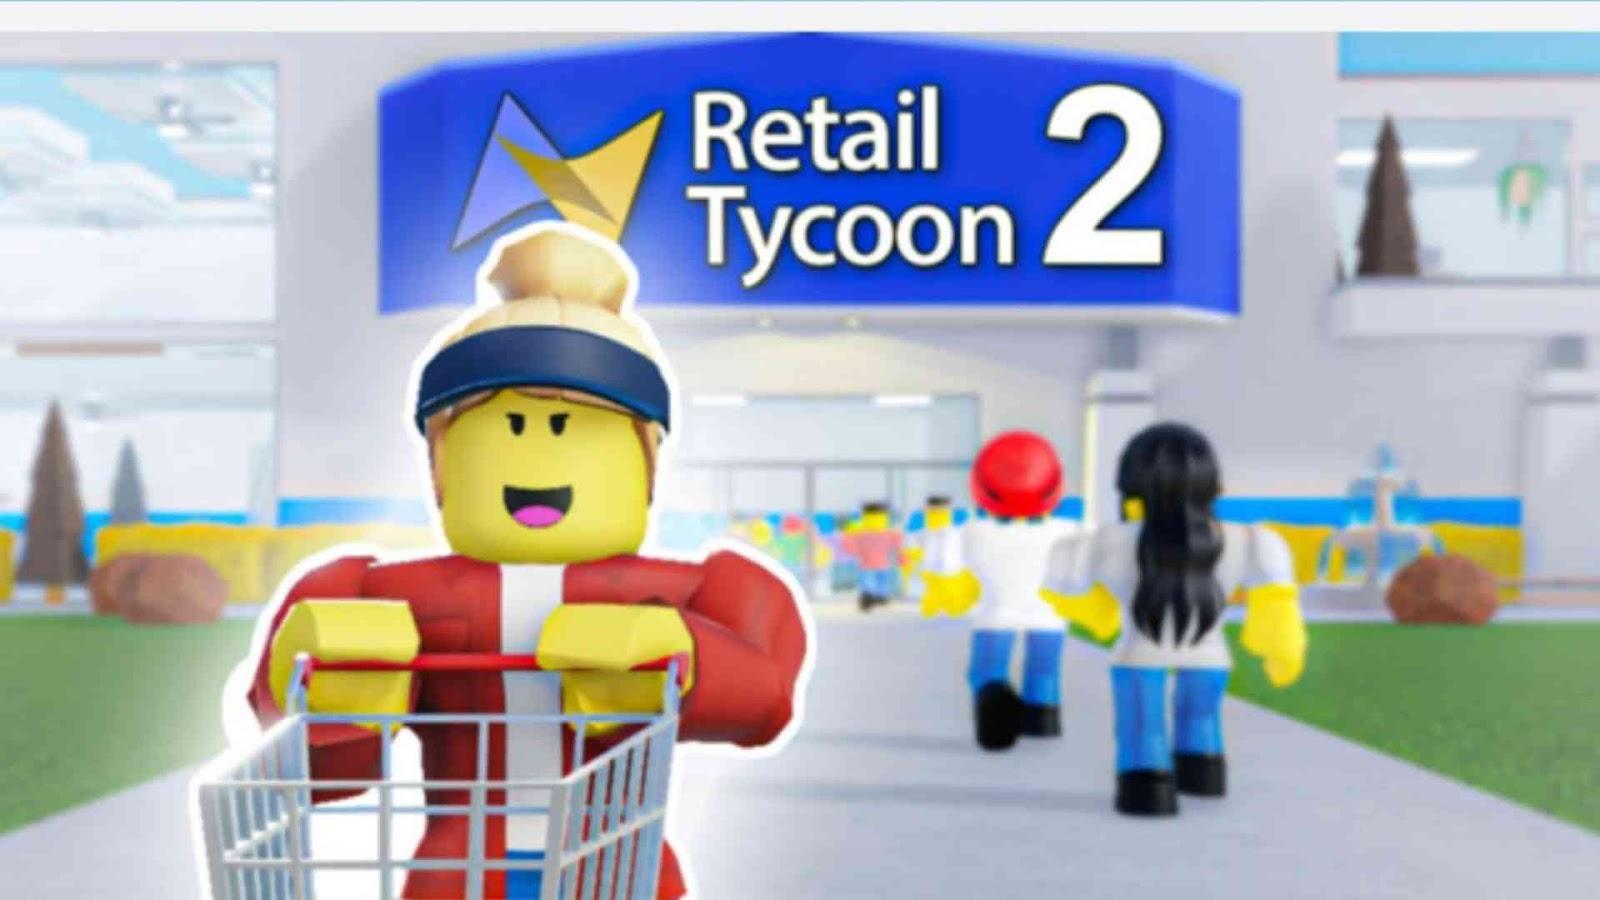 Retail Tycoon 2